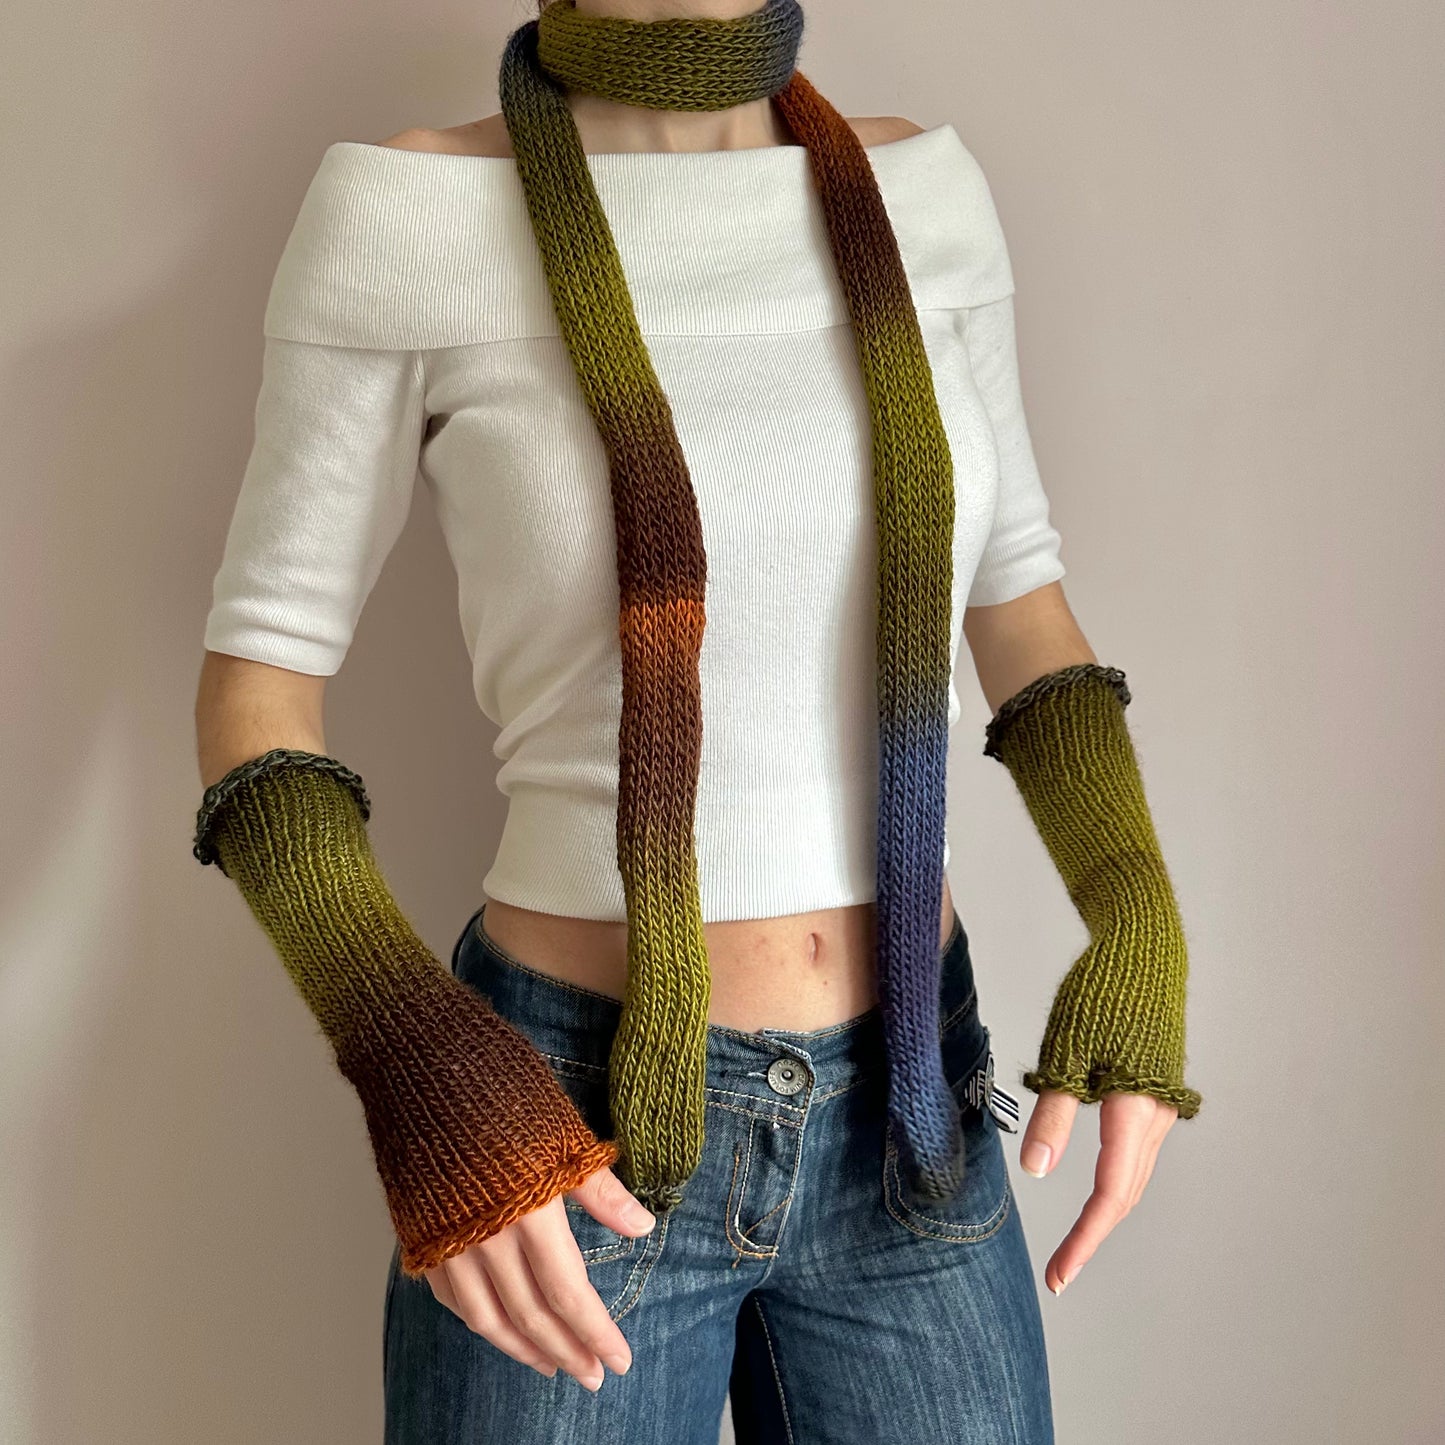 Handmade Aspen ombré knitted arm warmers